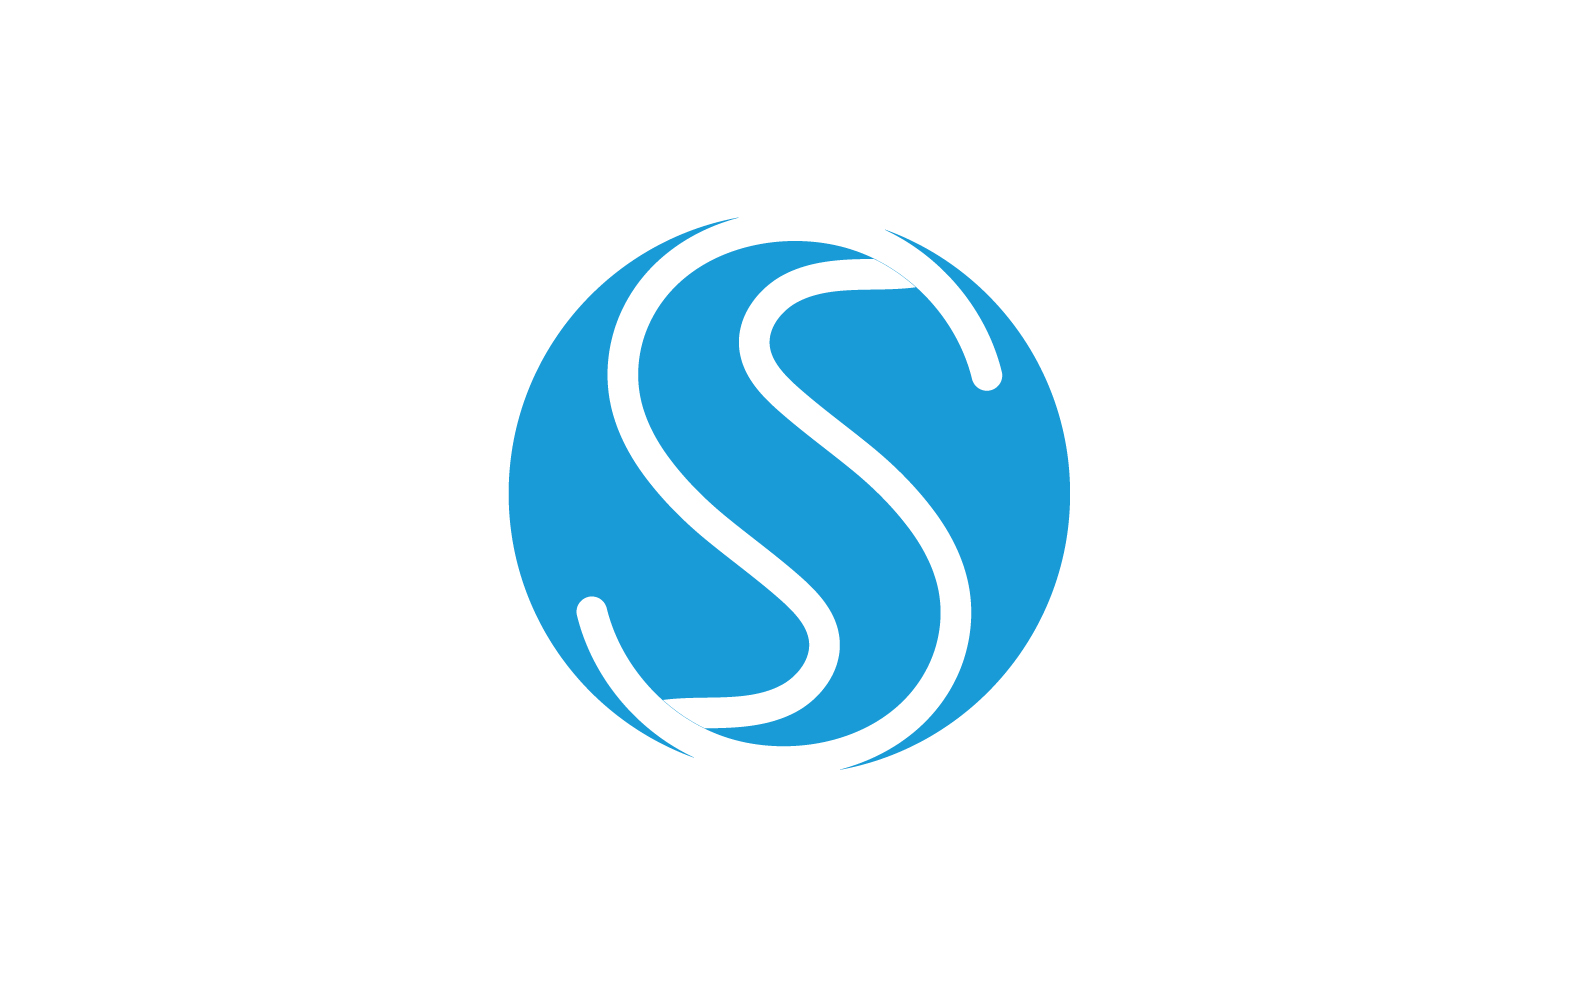 S letter icon logo vector design v18